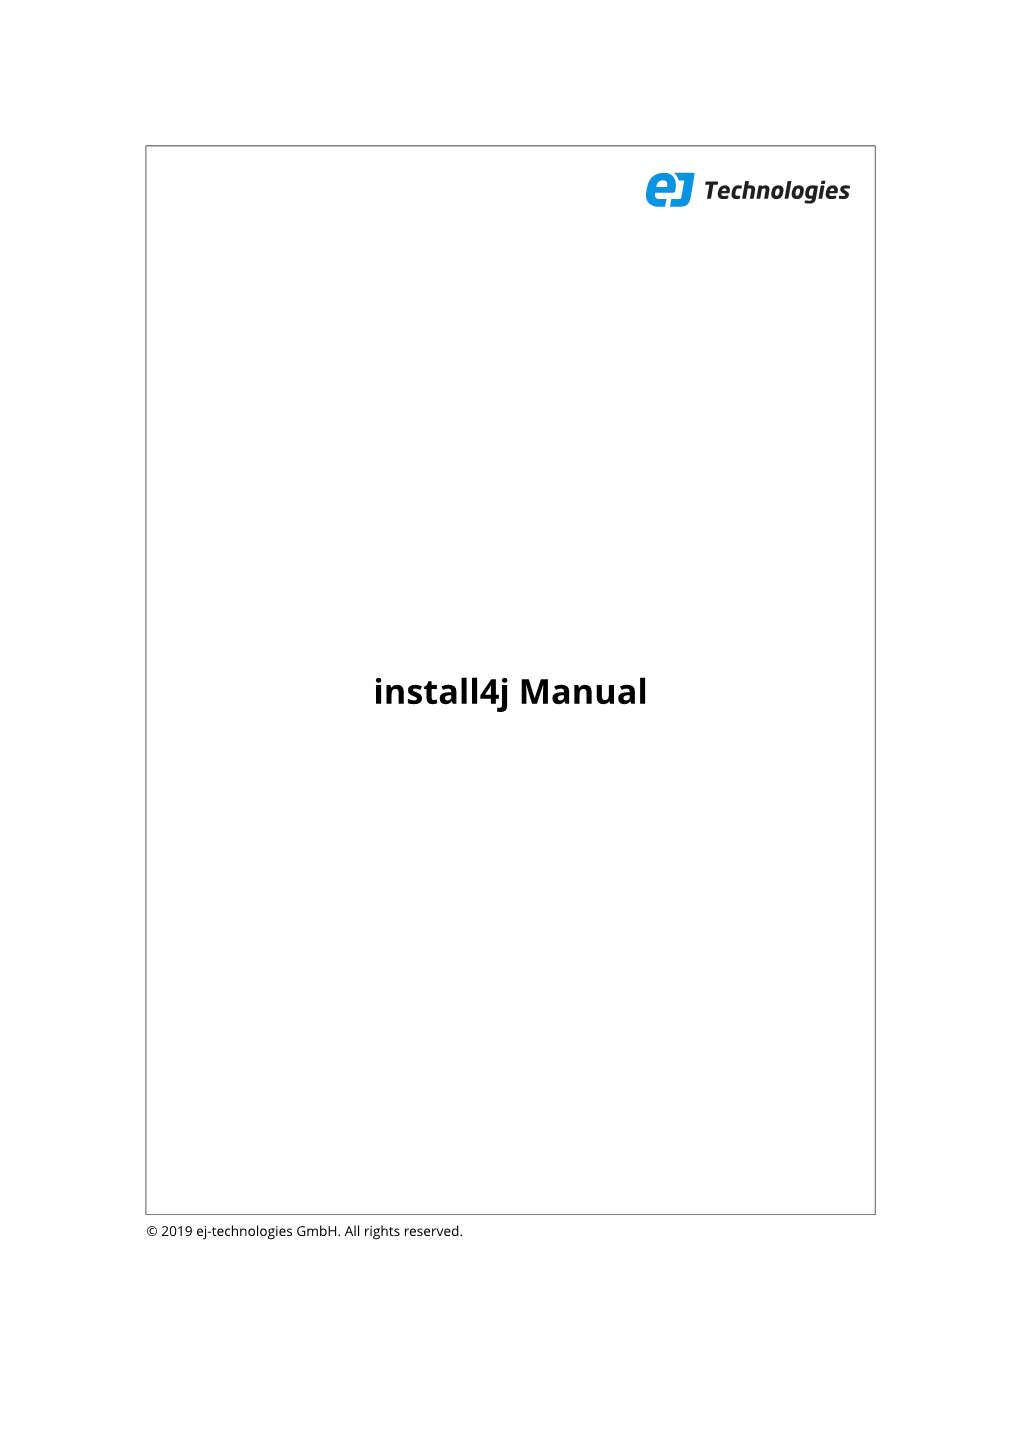 Install4j Manual